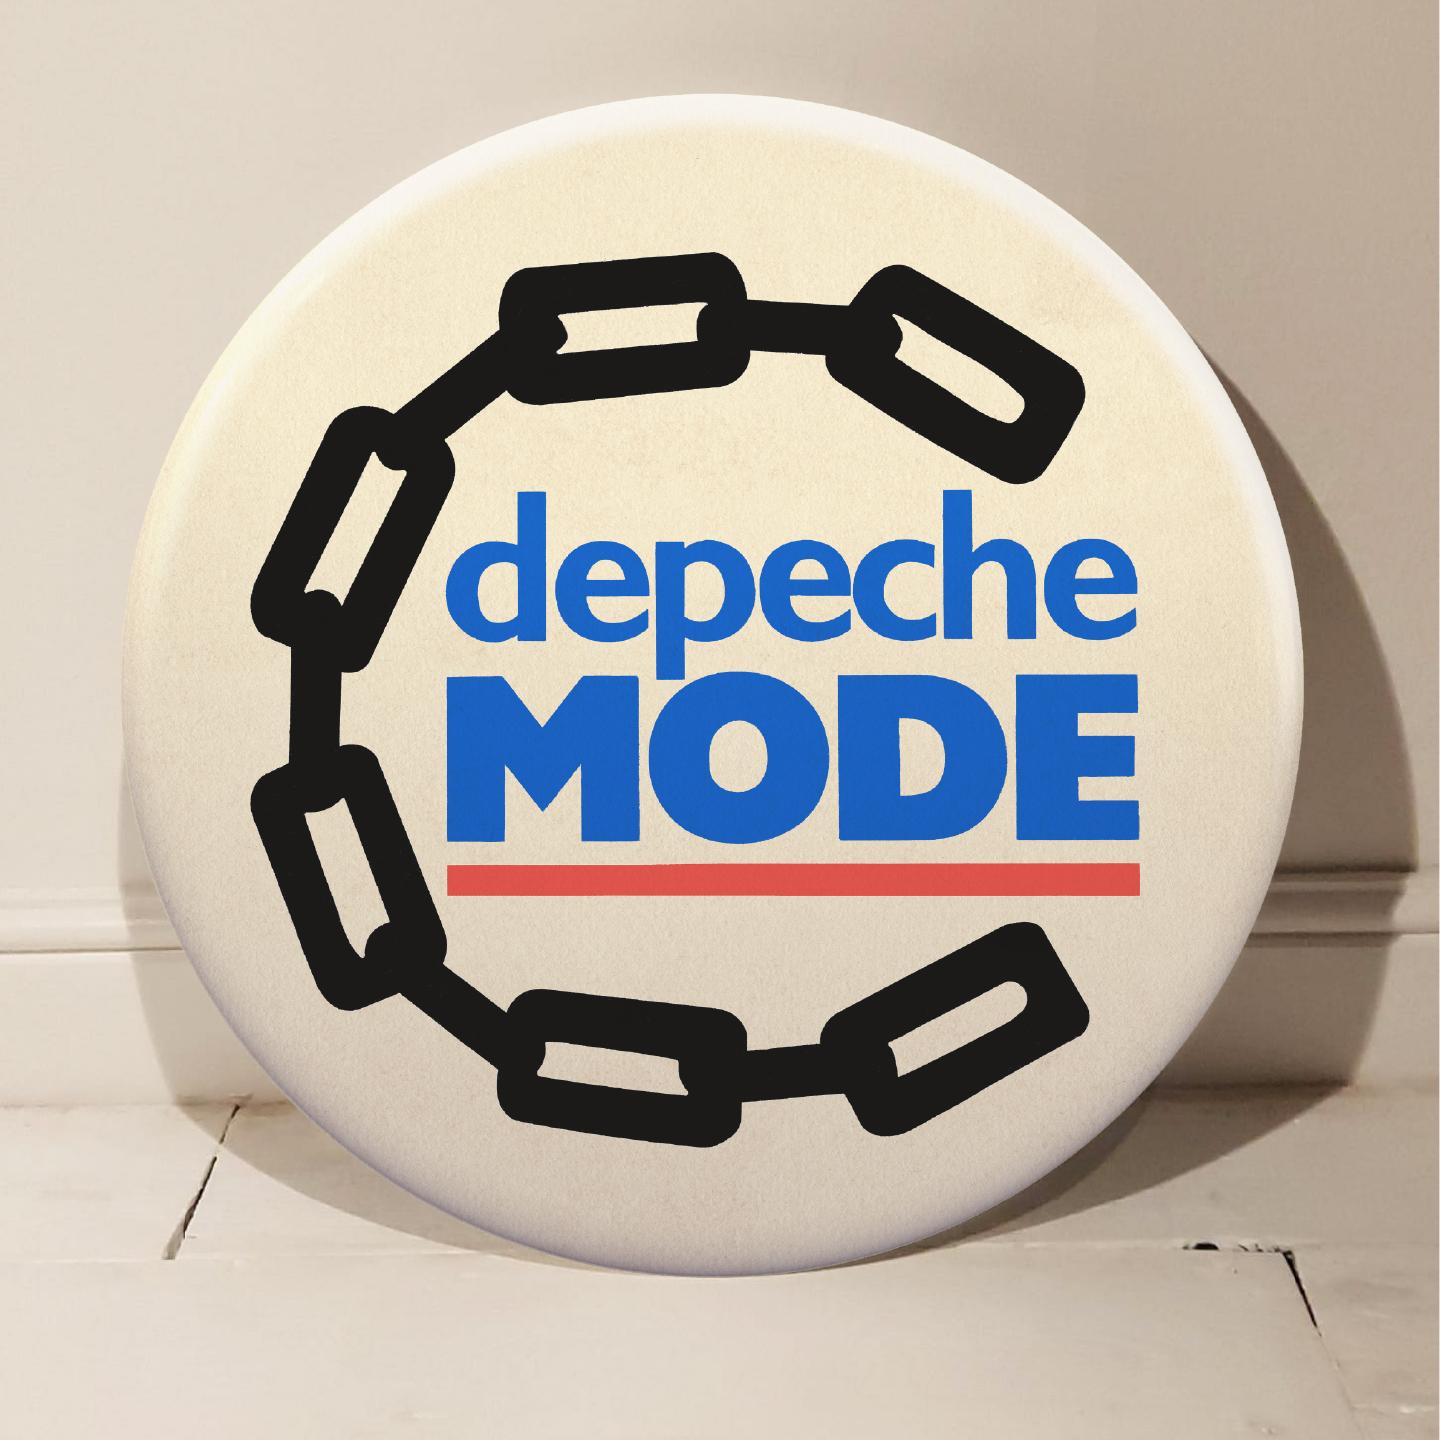 Depeche Mode Riesiger handgefertigter 3D-Vintage-Knopf – Mixed Media Art von Tony Dennis